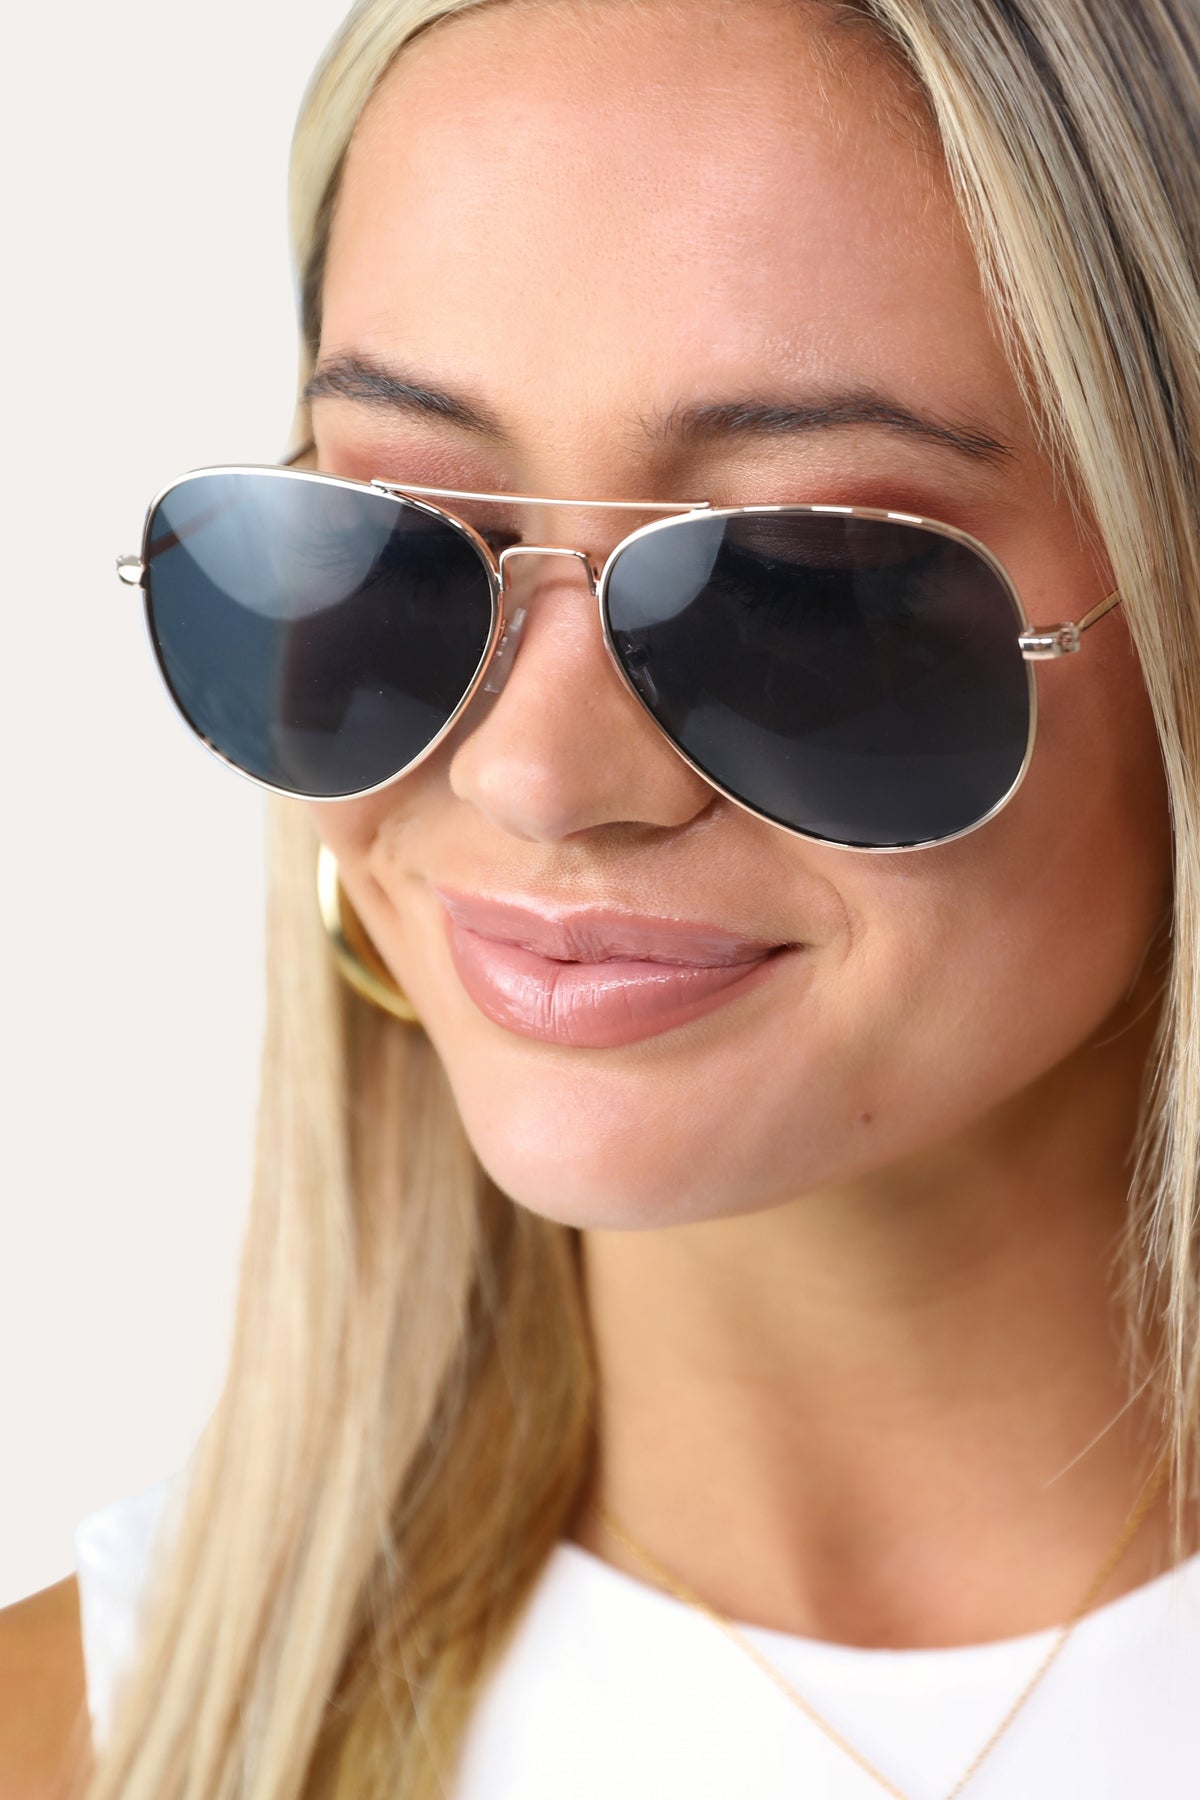 Model wearing The Sydney classic gold aviator sunglasses.